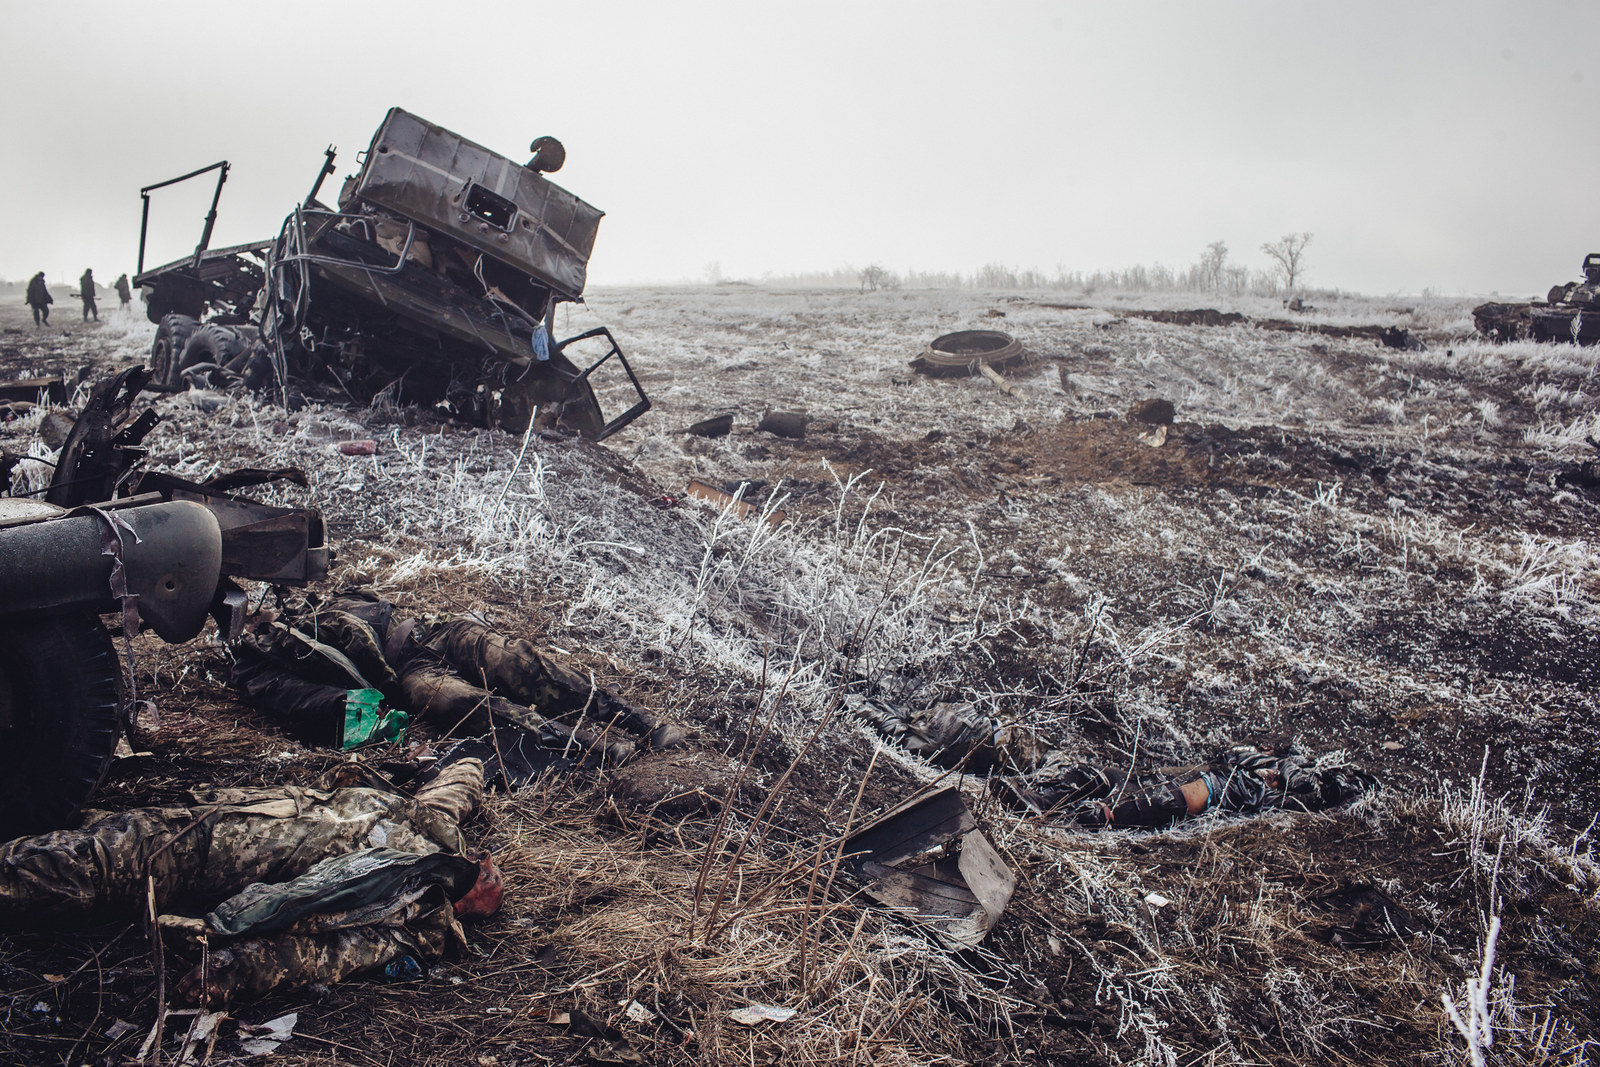 Horrific Images Capture The Sheer Brutality Of War In Ukraine